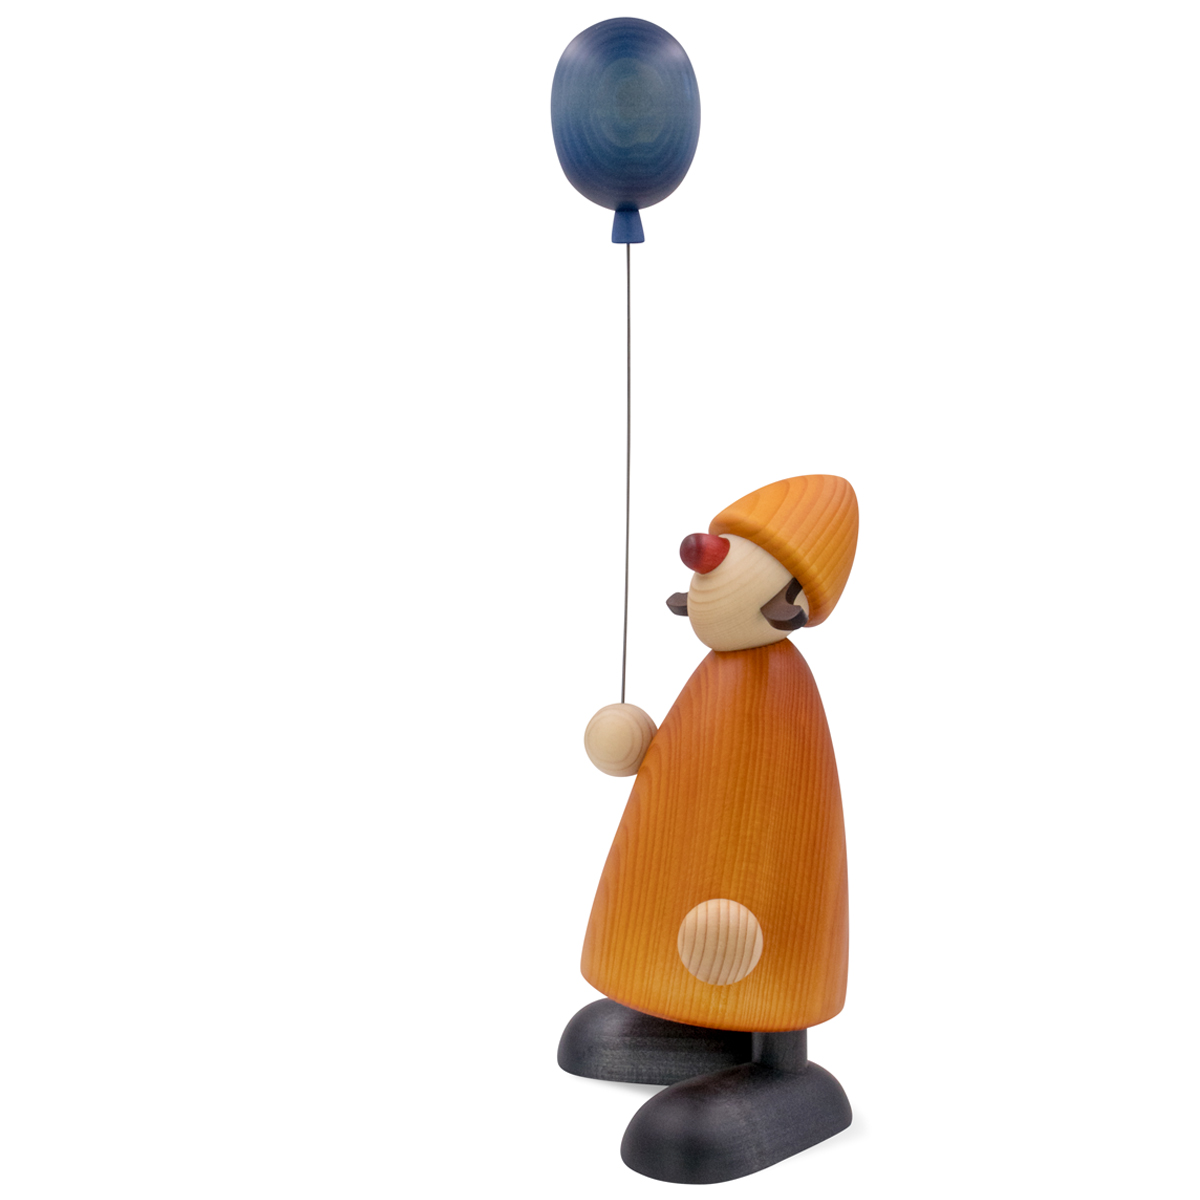 Gratulantin Lina mit blauem Luftballon, groß, gelb